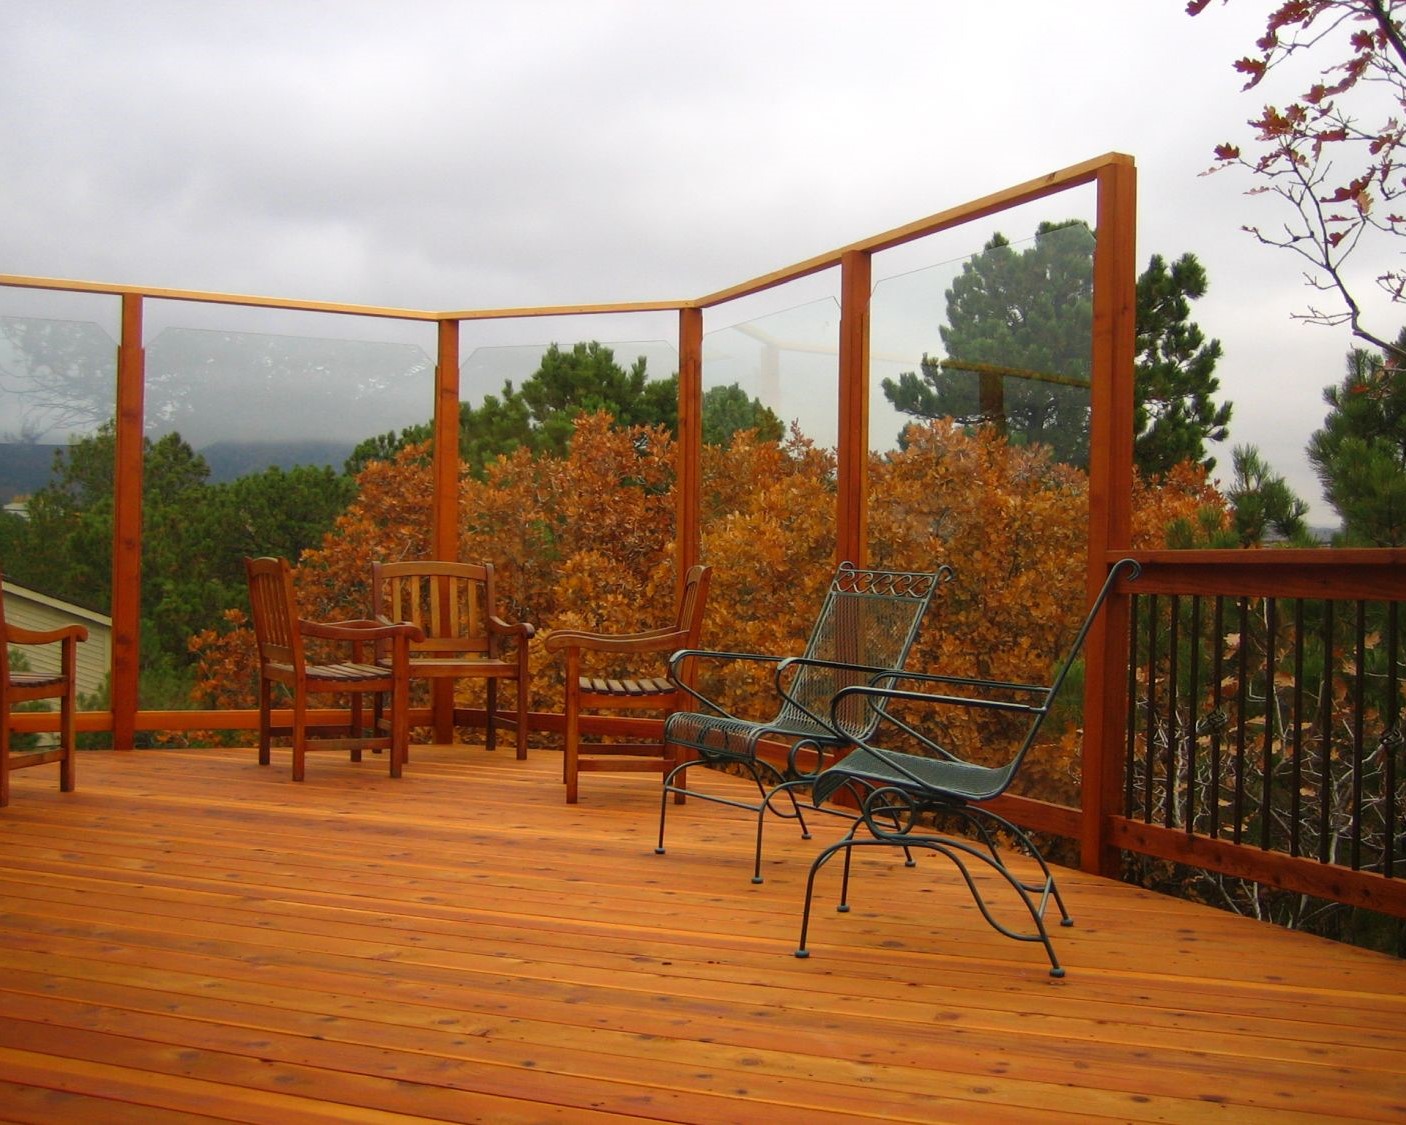 Custom designed Redwood deck with large glass wind breaks installed on end of deck.